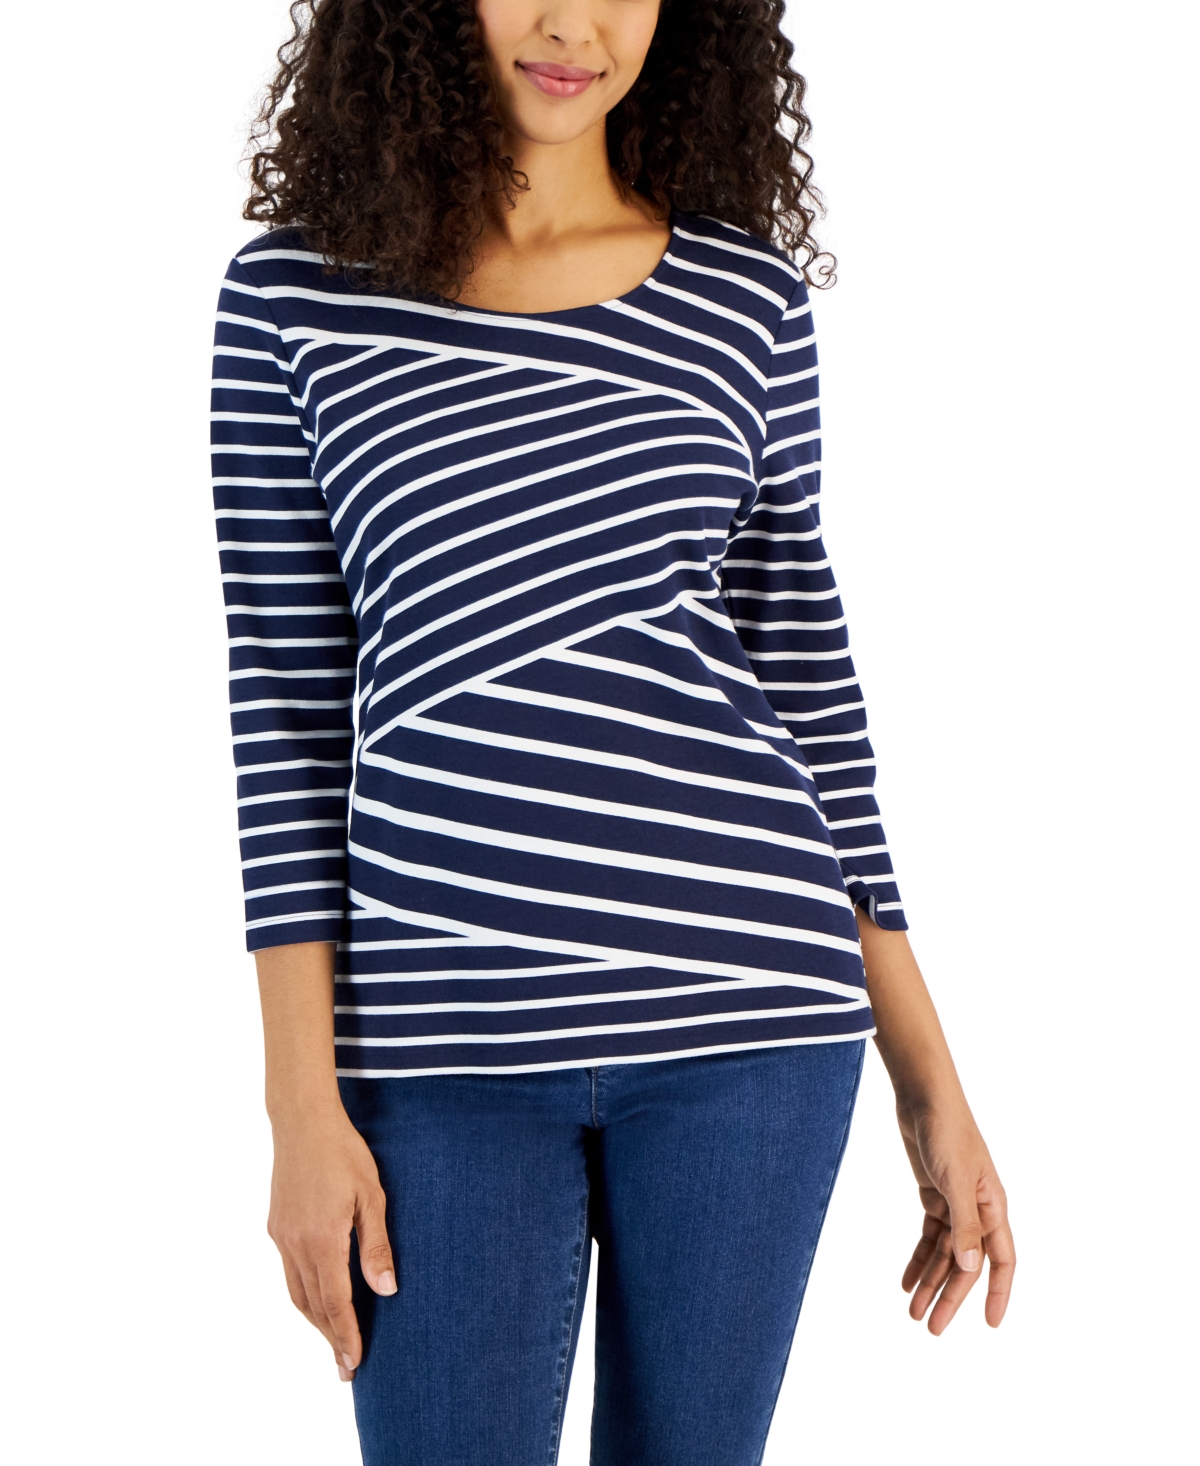 Women's Callie Asymmetrical-Stripe 3/4-Sleeve Top, Created for Macy's - Intrepid Navy